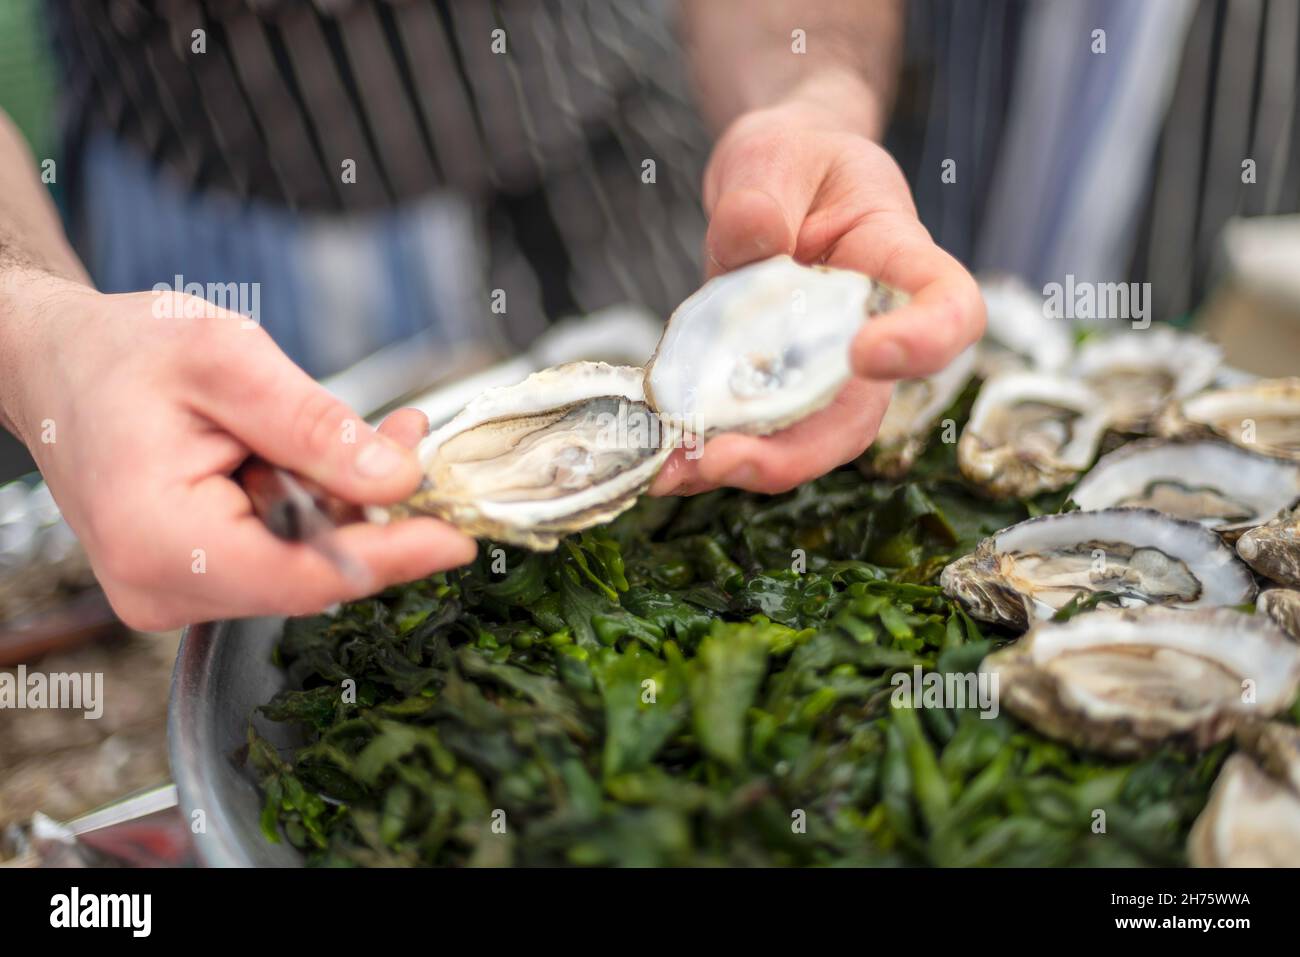 Shucking oysters at Soho Food Festival Stock Photo